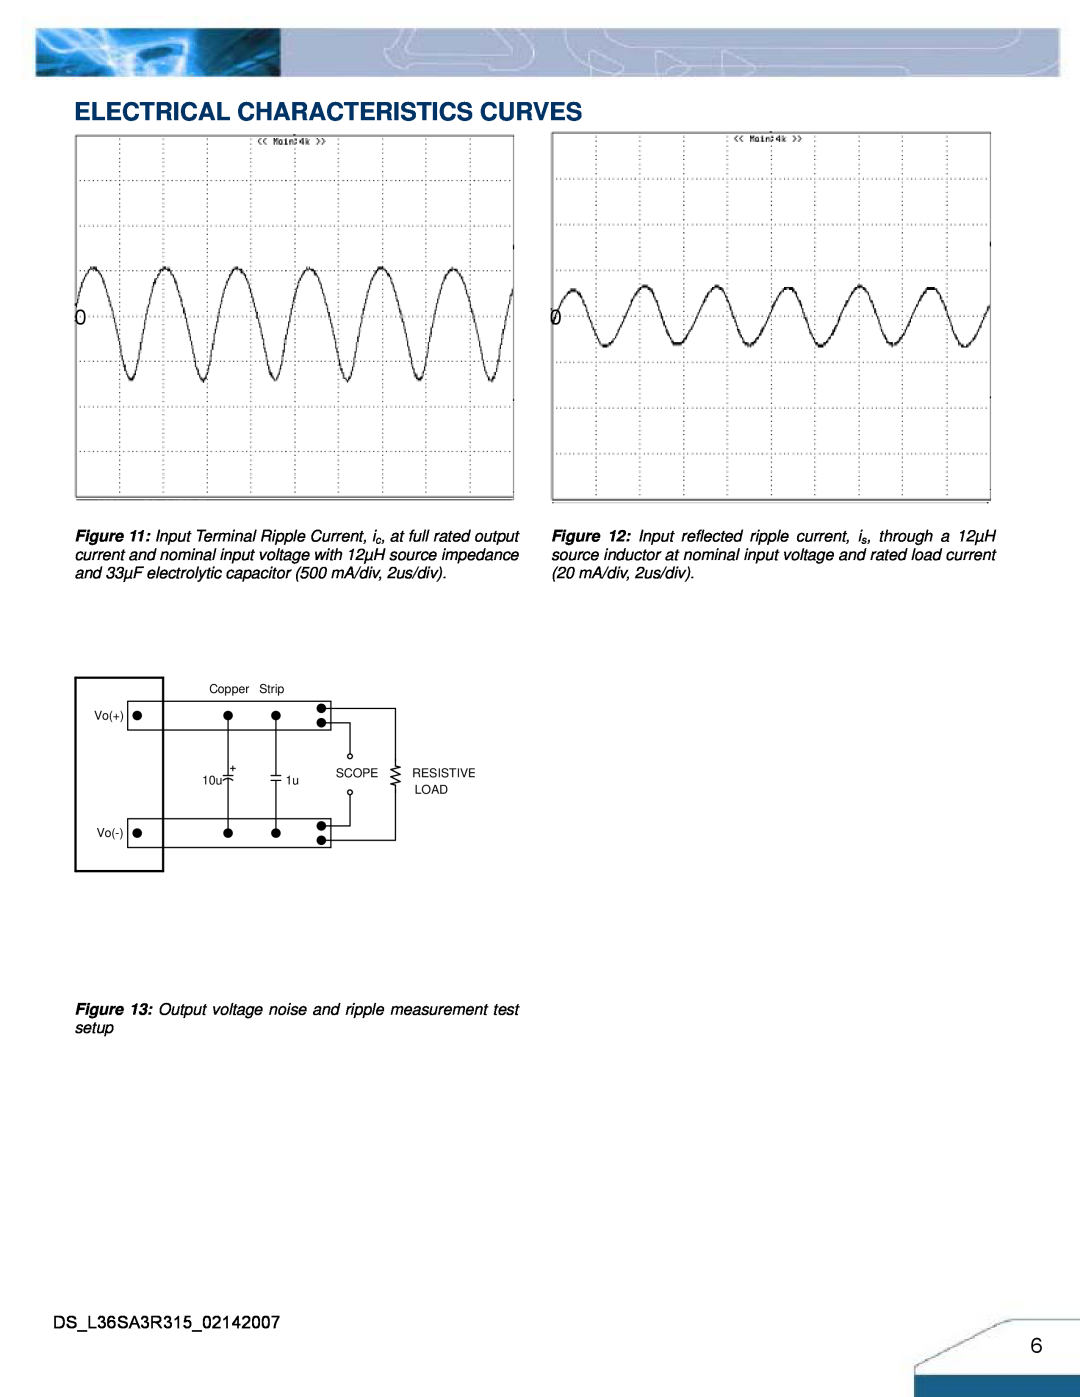 Delta Electronics Series L36SA Electrical Characteristics Curves, Output voltage noise and ripple measurement test setup 